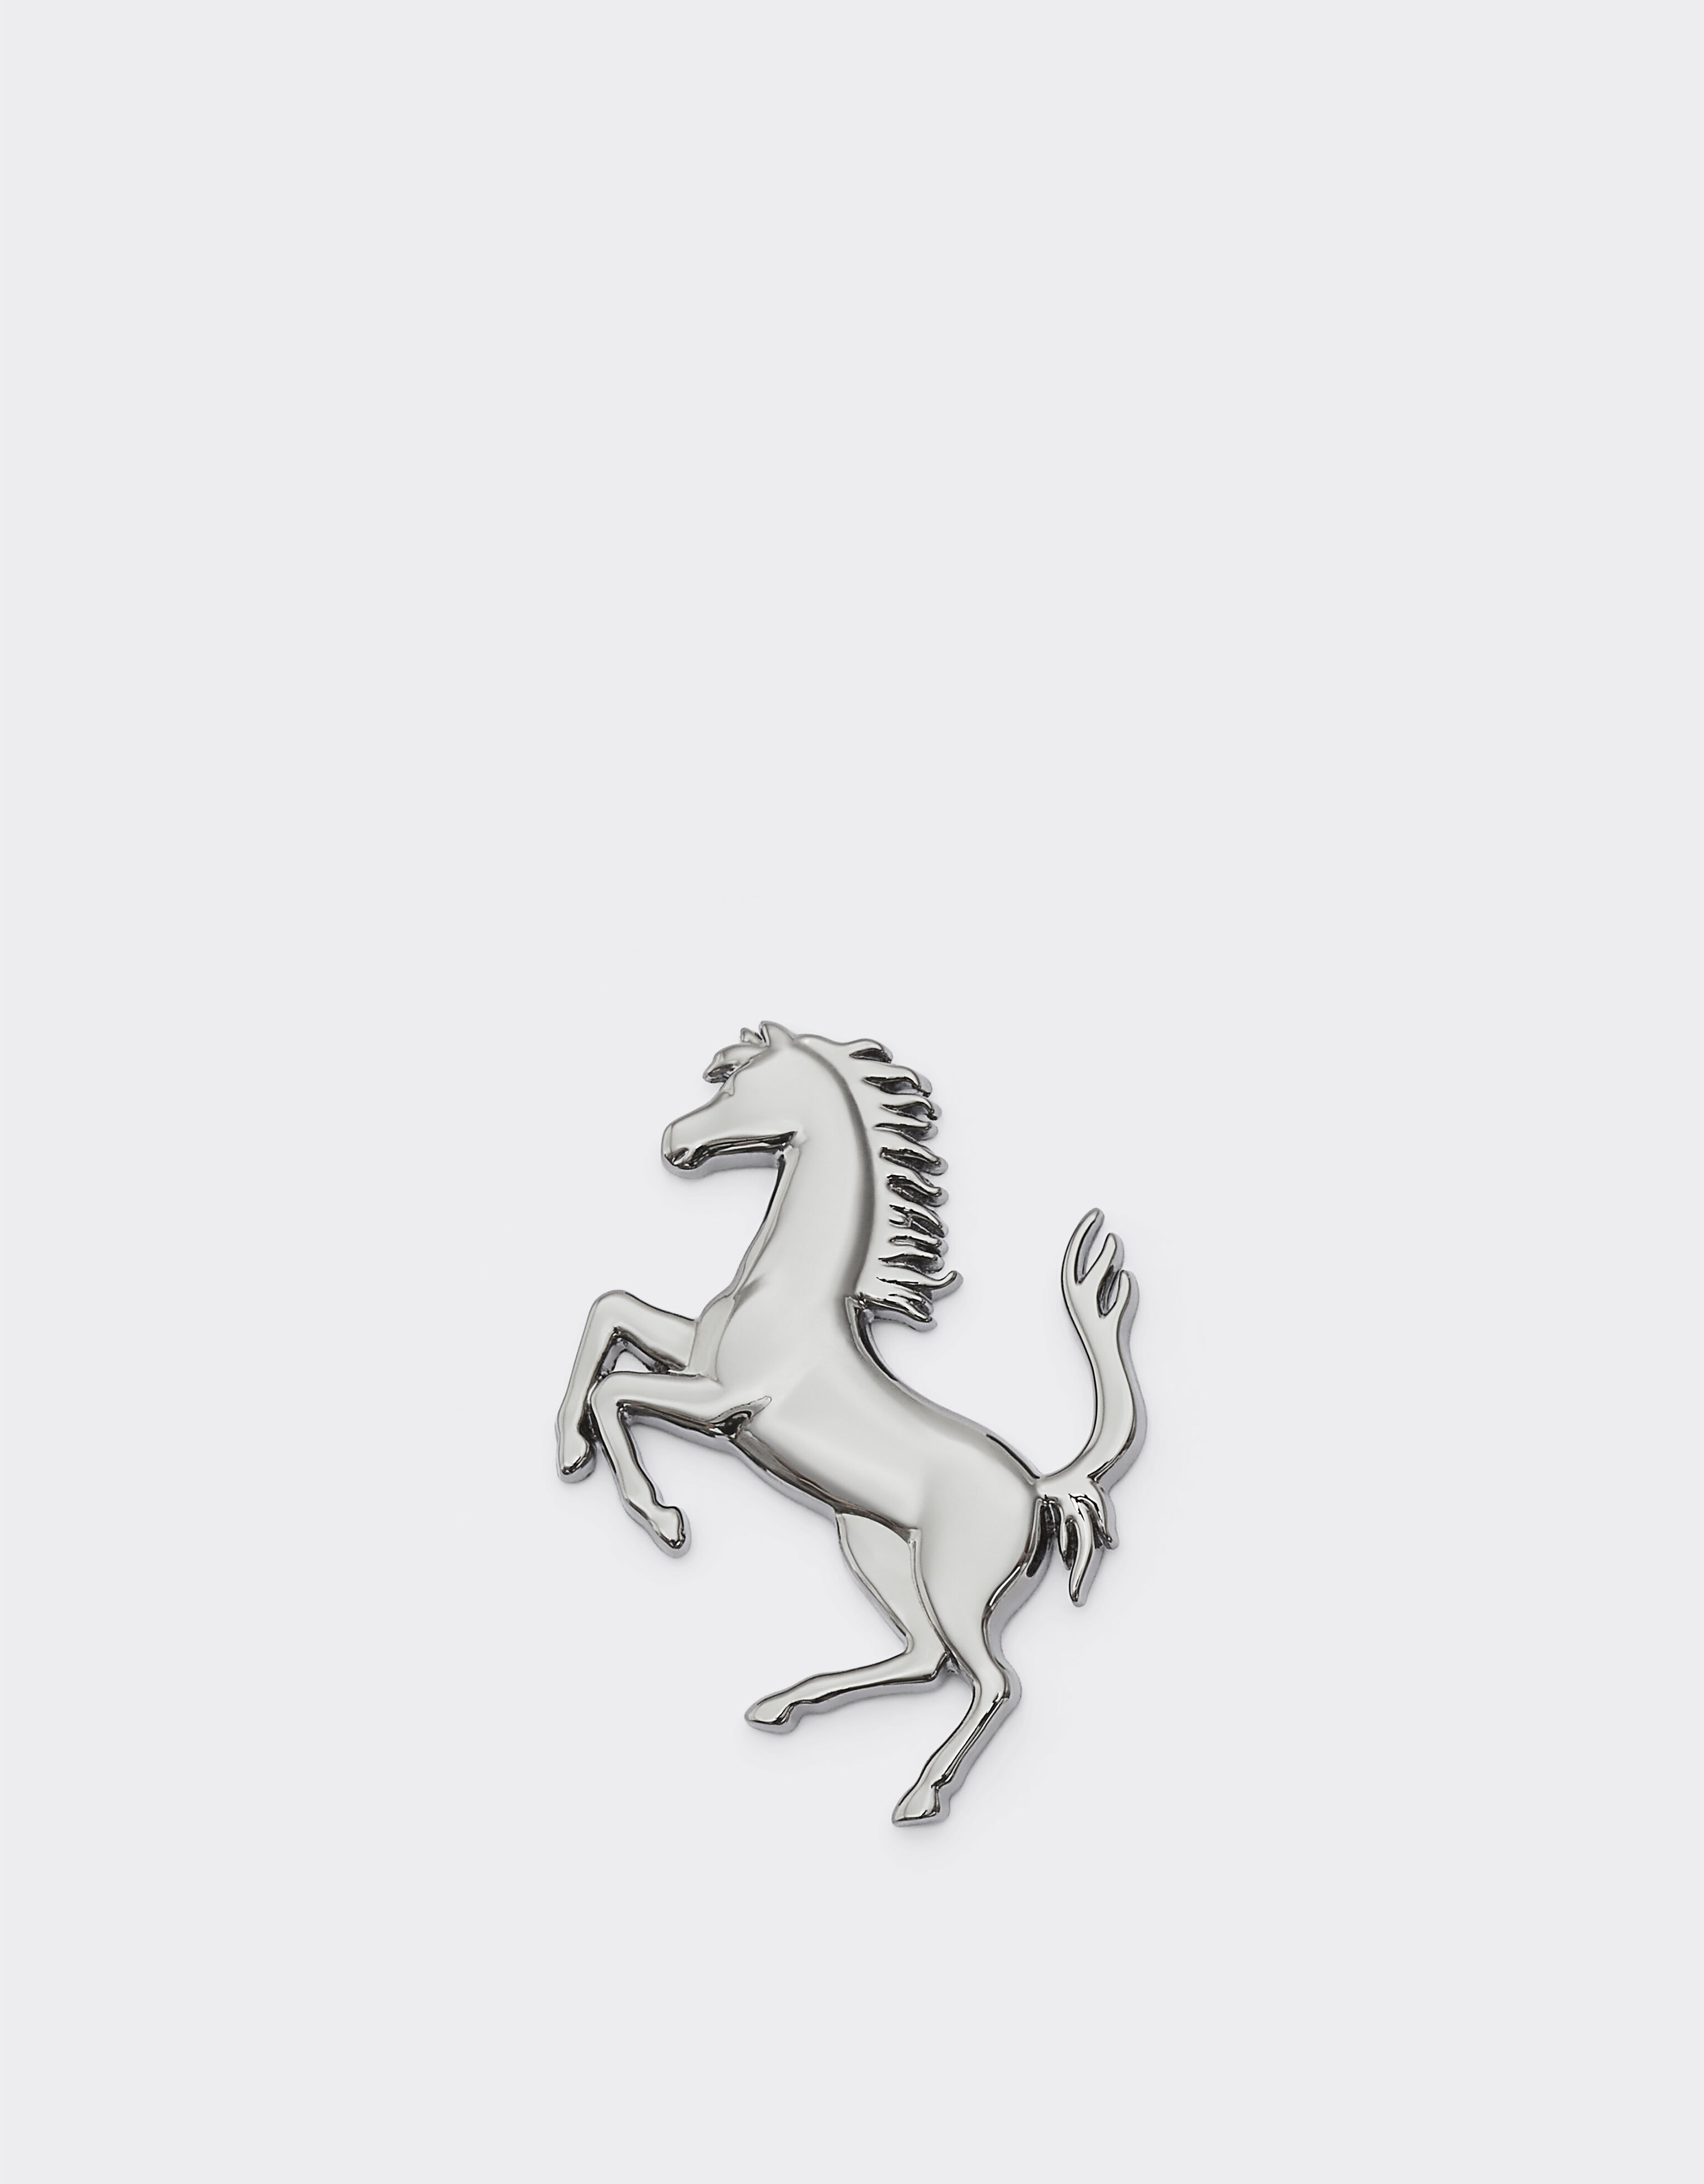 Ferrari Prancing Horse brooch Charcoal 20057f